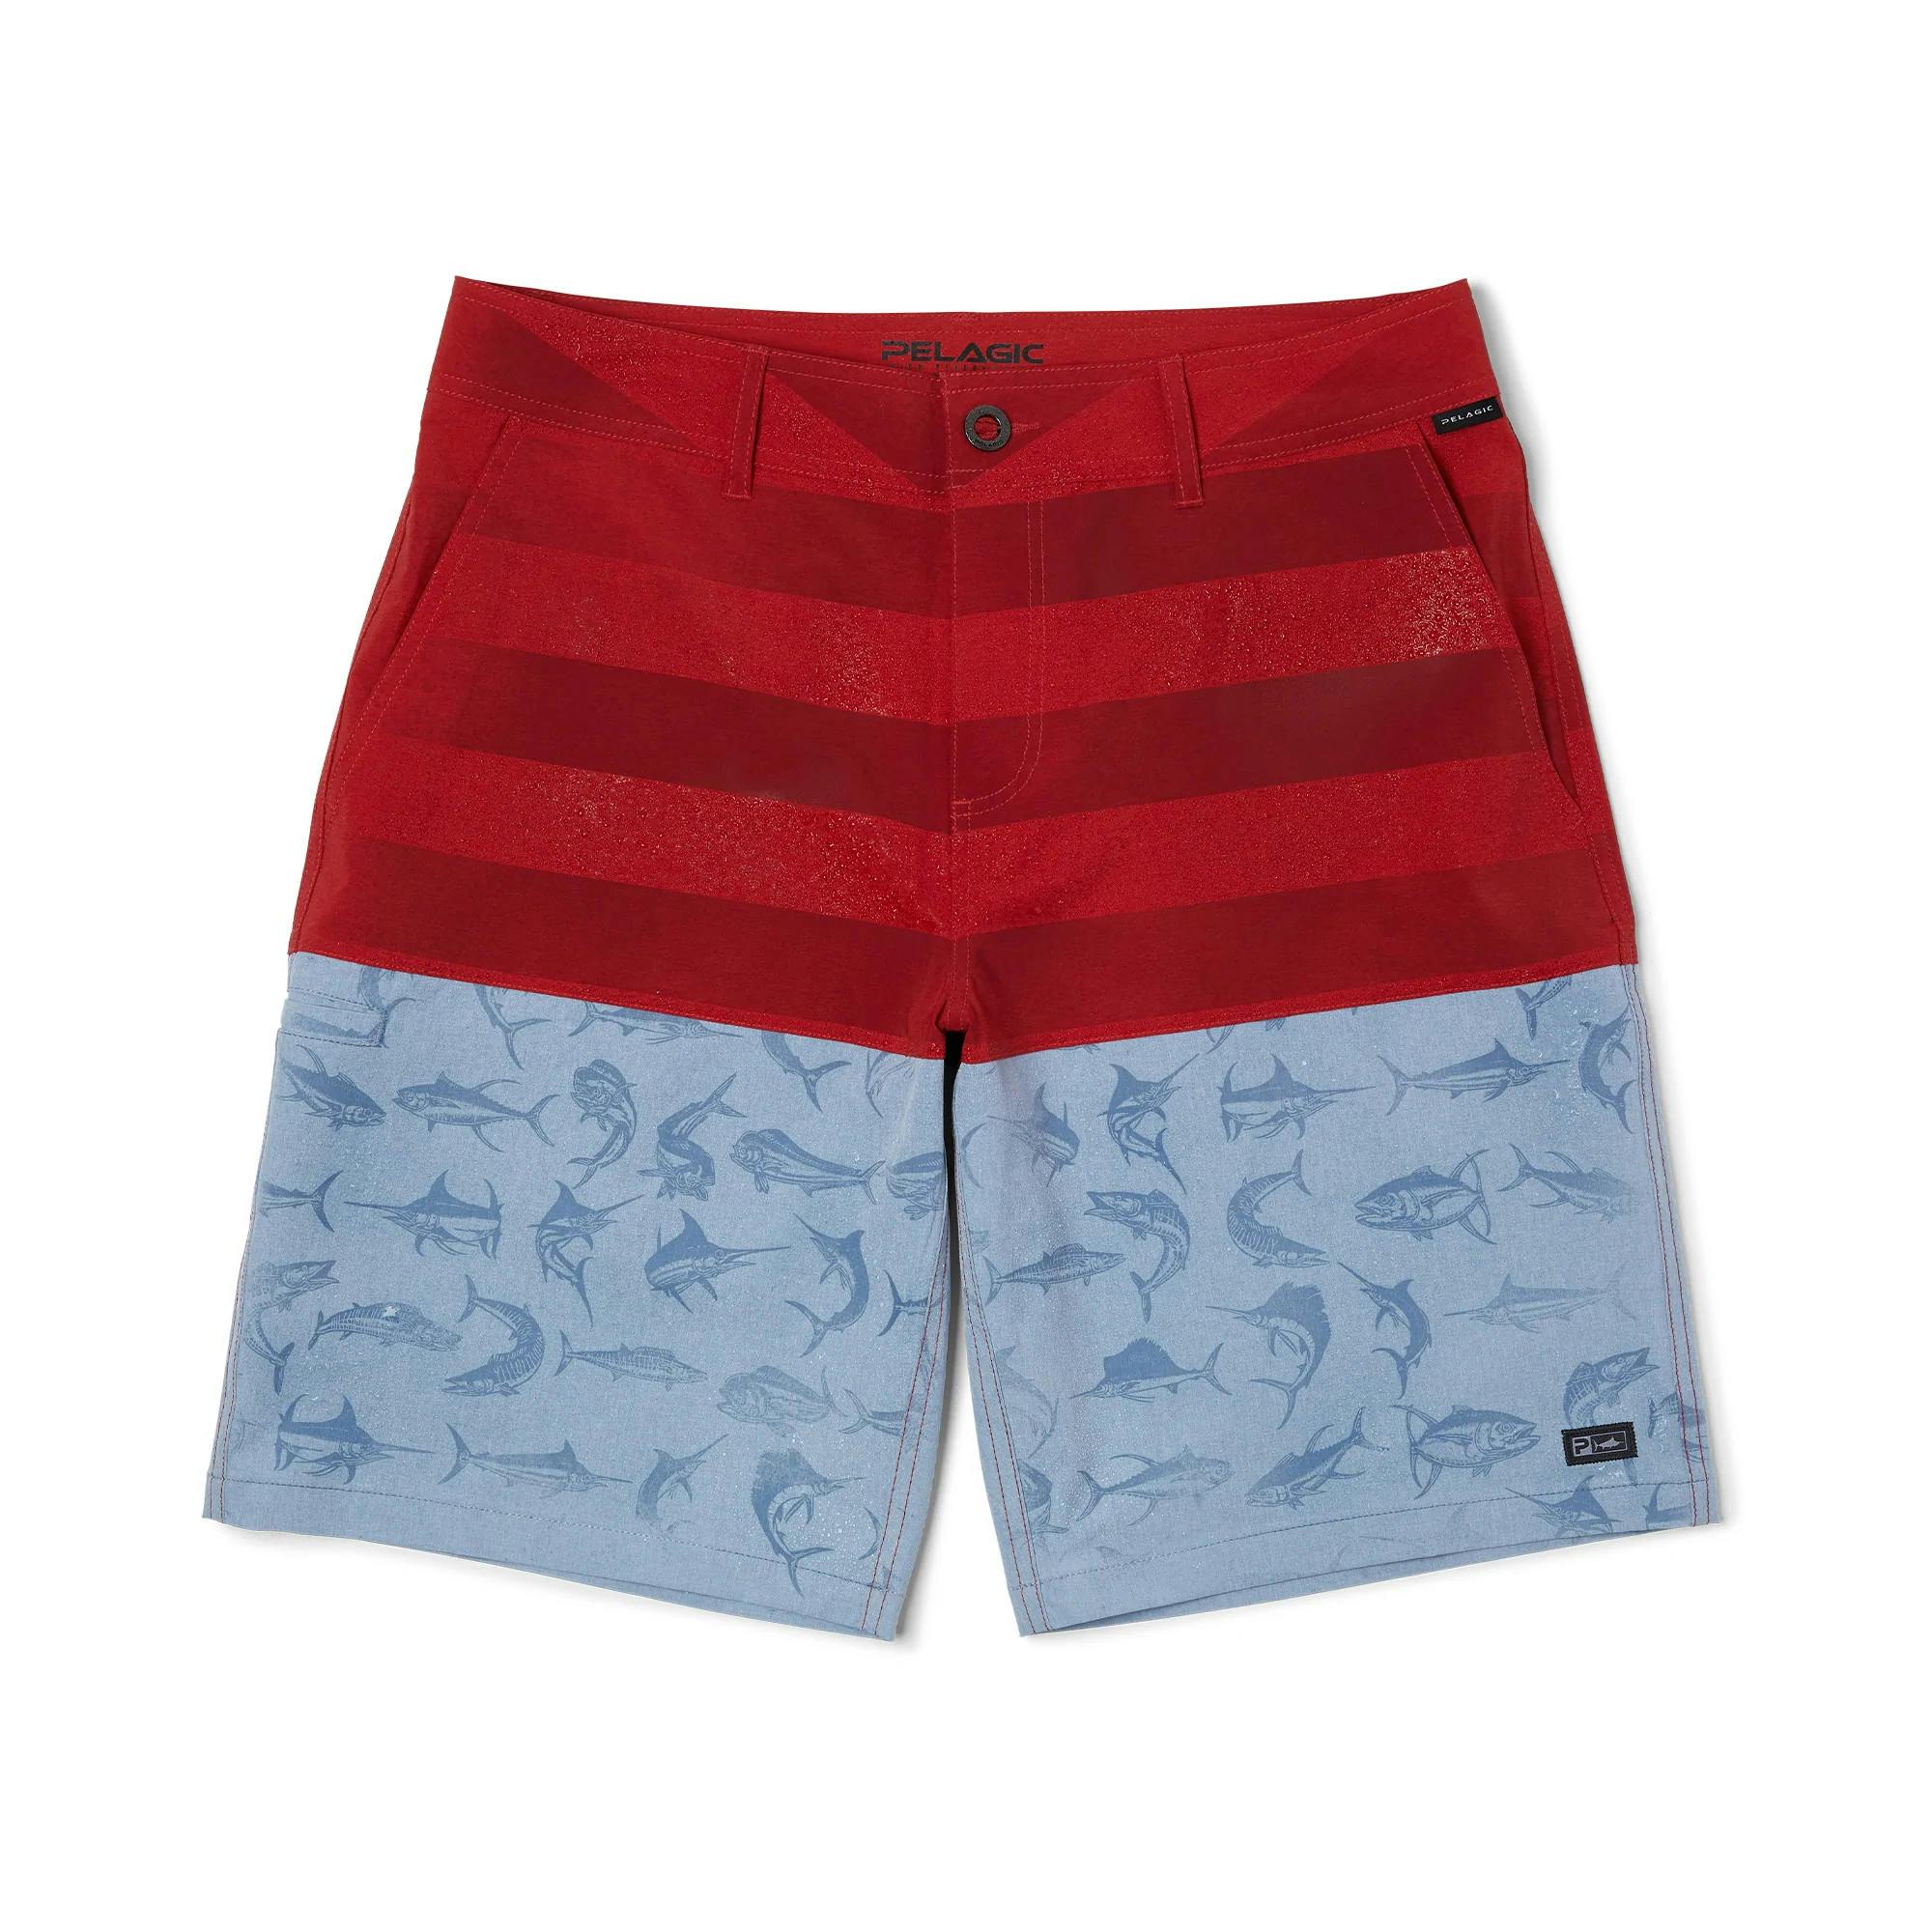 Pelagic Deep Sea Americamo Hybrid Fishing Shorts (Men's) Front 2 - Smokey Blue